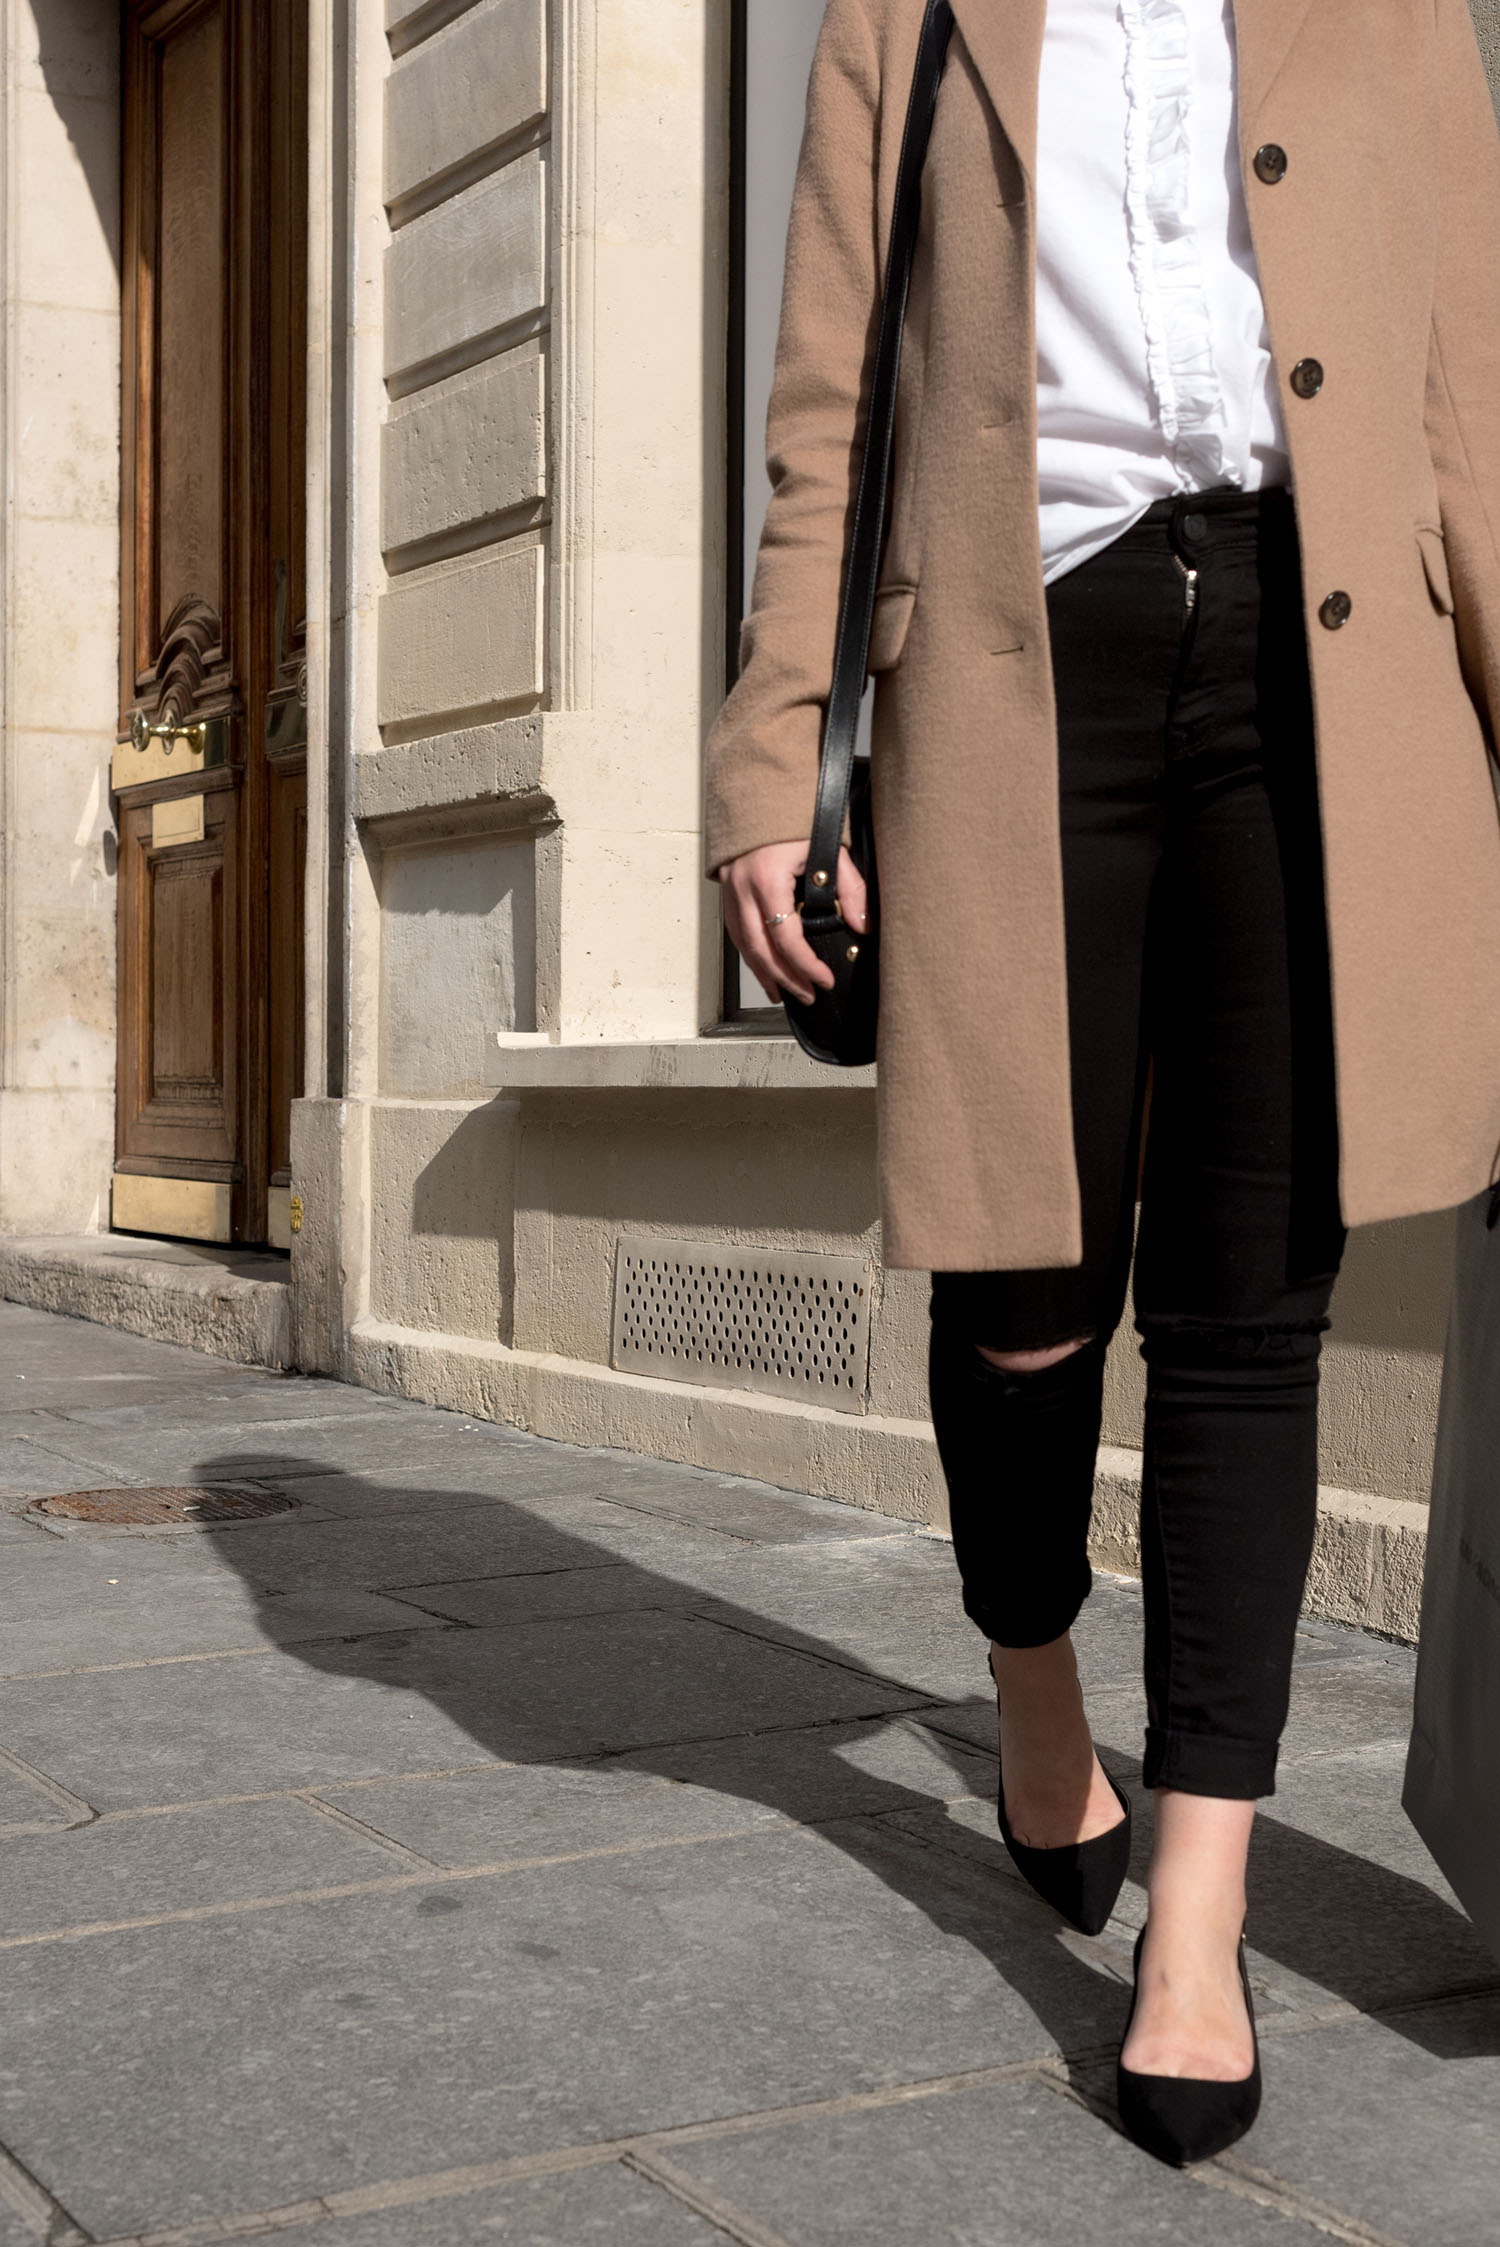 Outfit details on top Winnipeg fashion blogger Cee Fardoe of Coco & Vera, including Mavi Alissa skinny jeans and Mango block heels